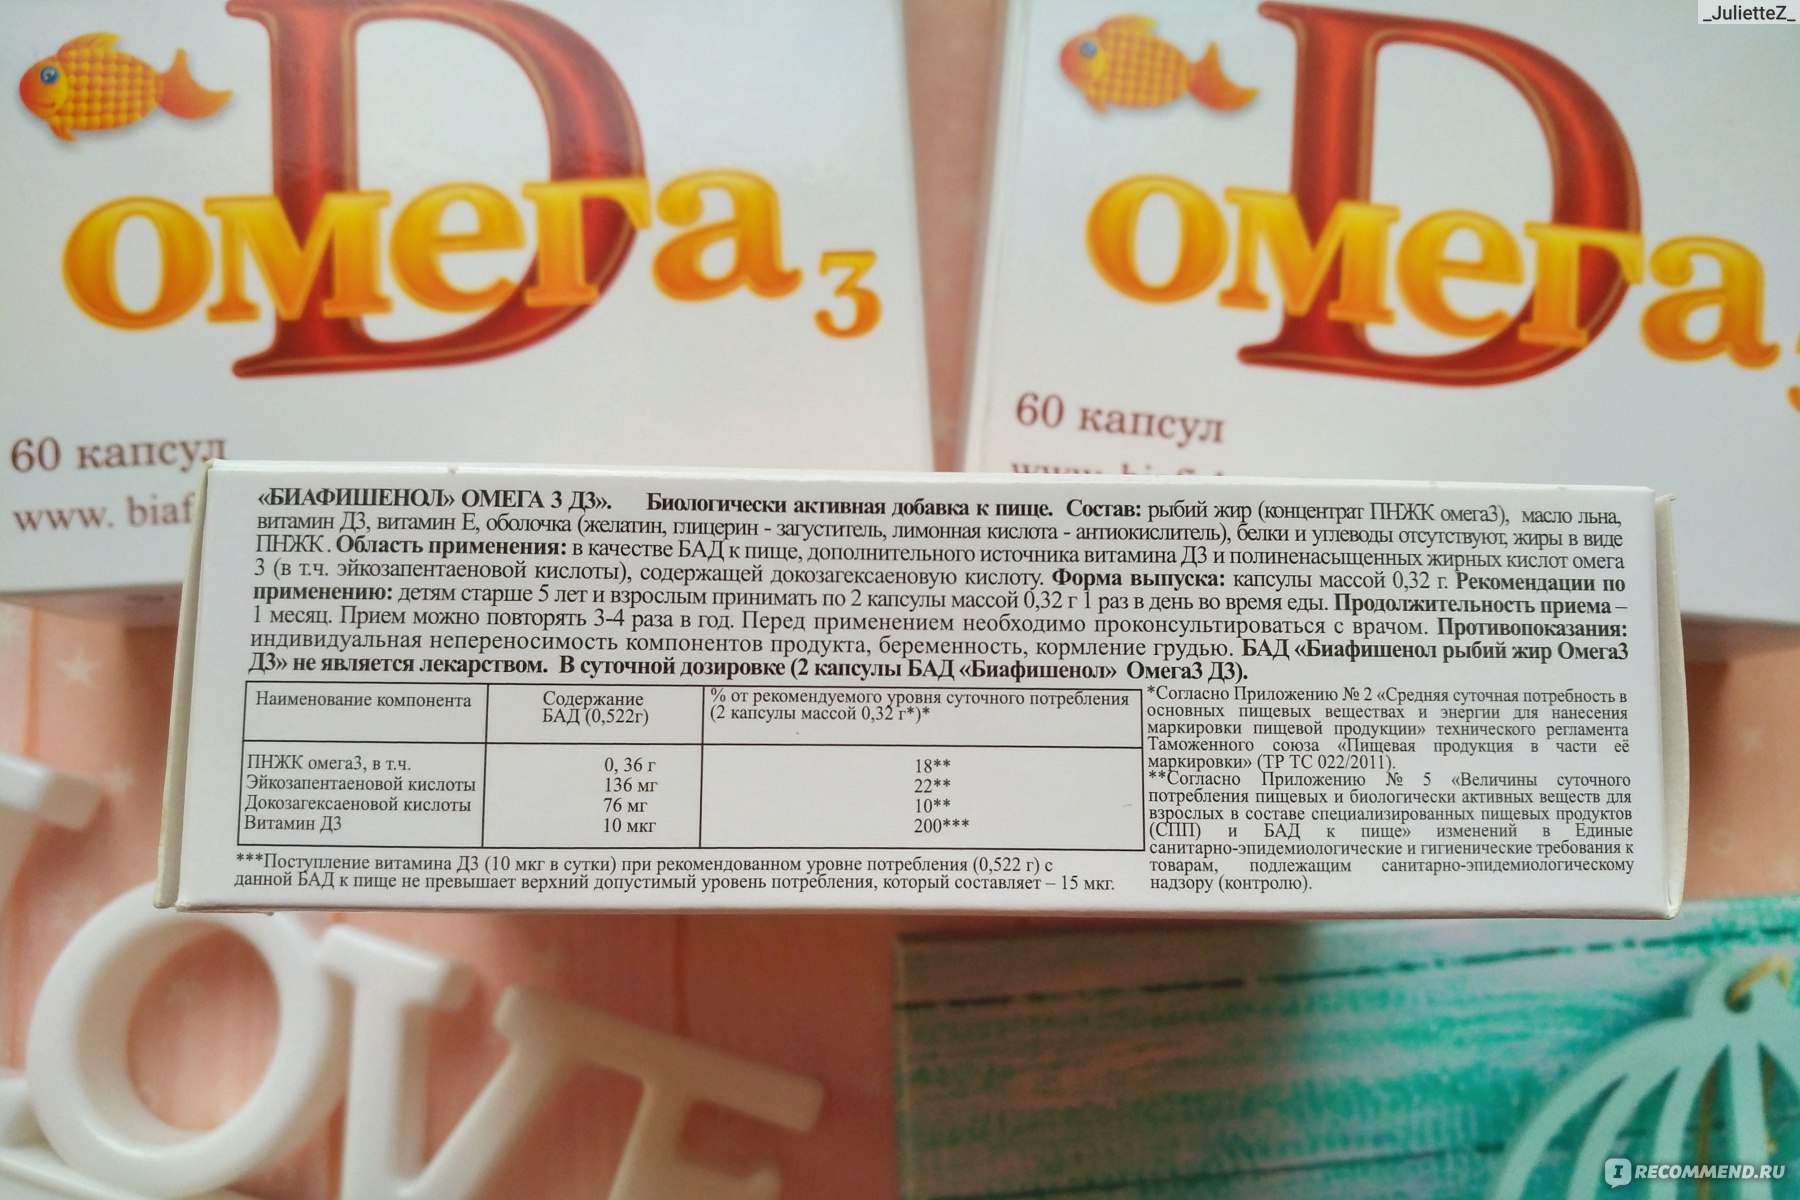 Можно ли пить омегу и д3 вместе. Биафишенол Омега-3 d3. Биафишенол Омега 3 д3. Омега-3 с витамином д. Омега-3 с витамином д3.